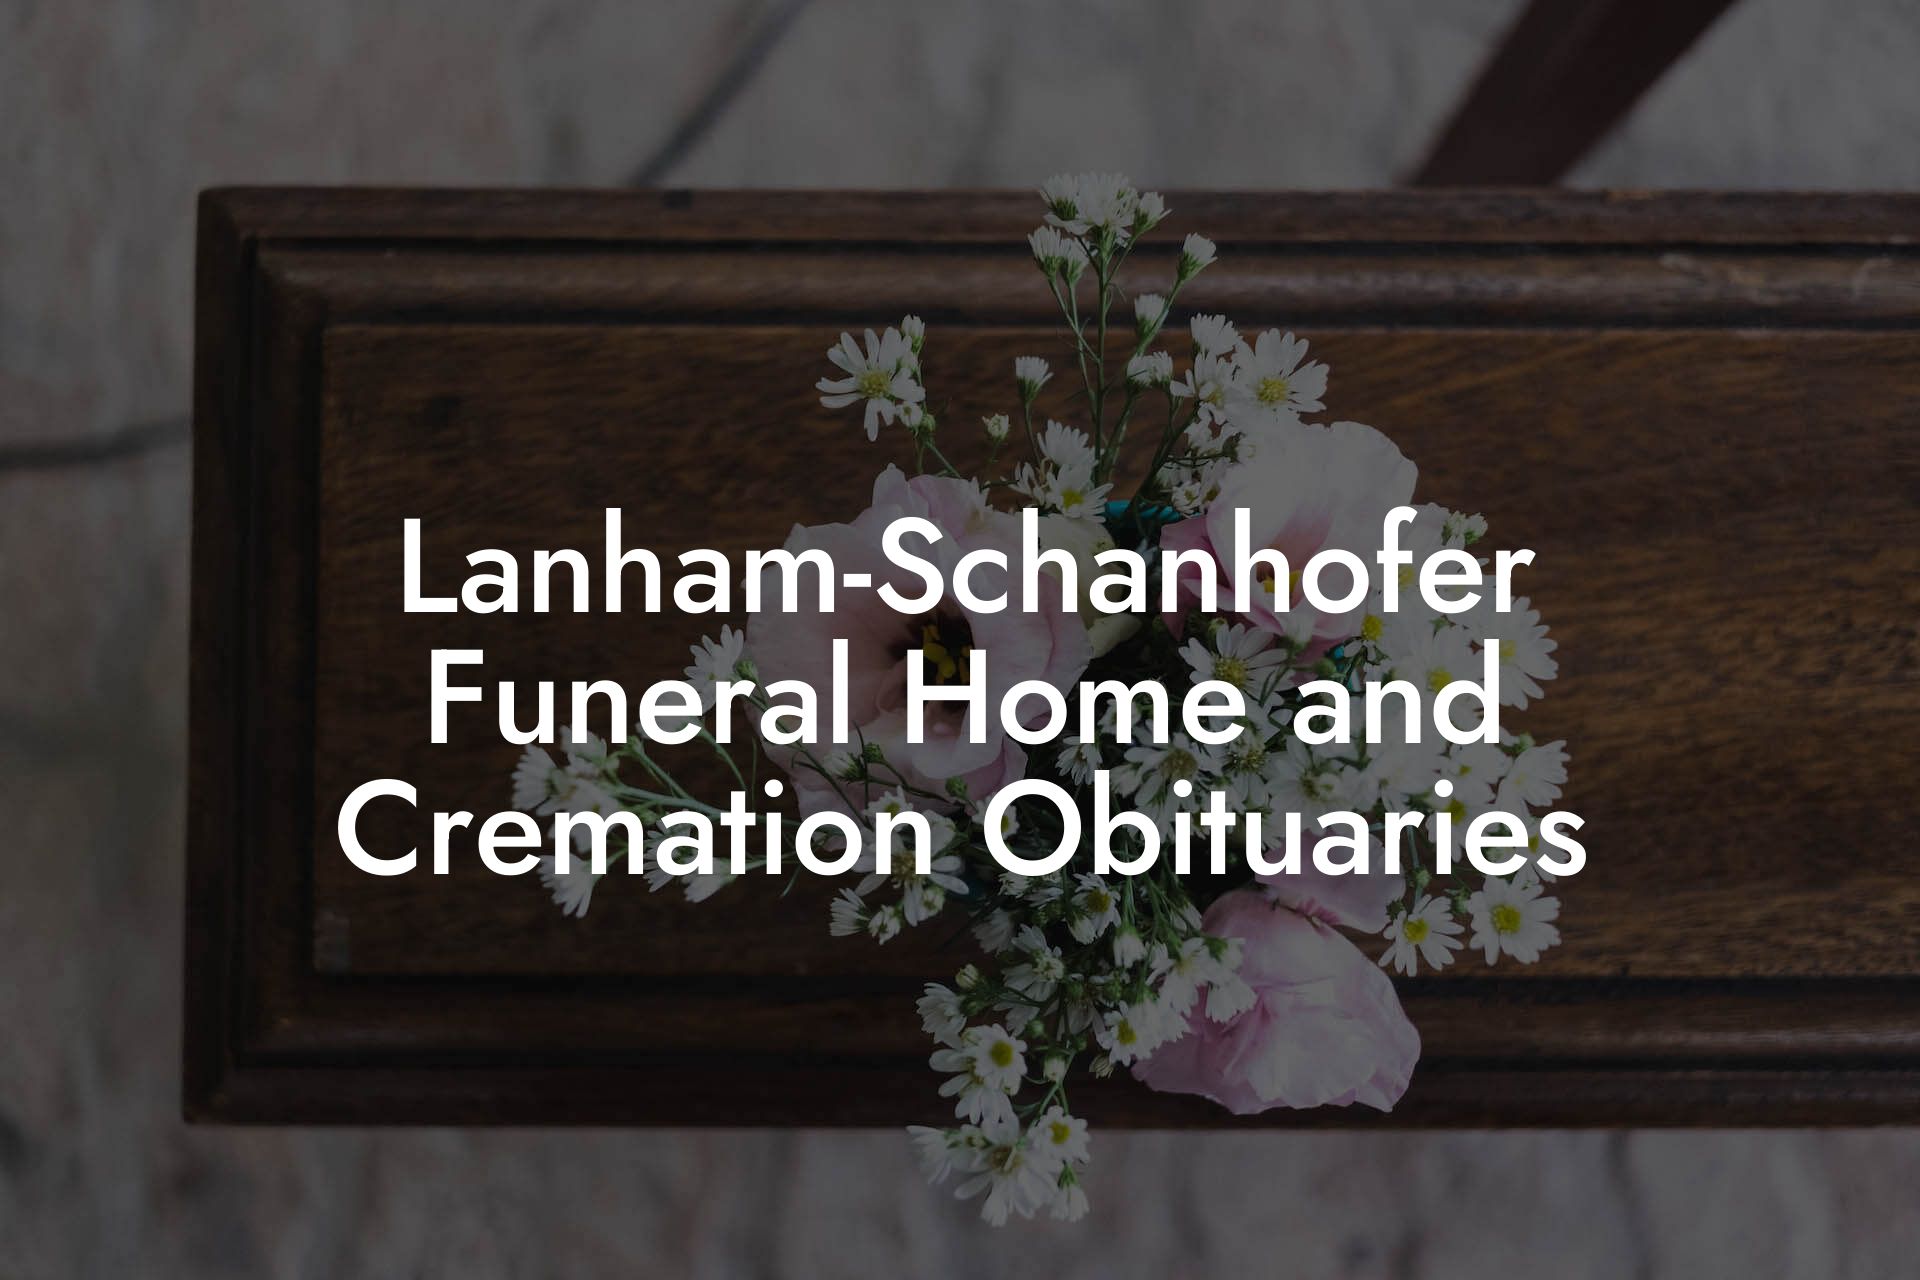 Lanham-Schanhofer Funeral Home and Cremation Obituaries